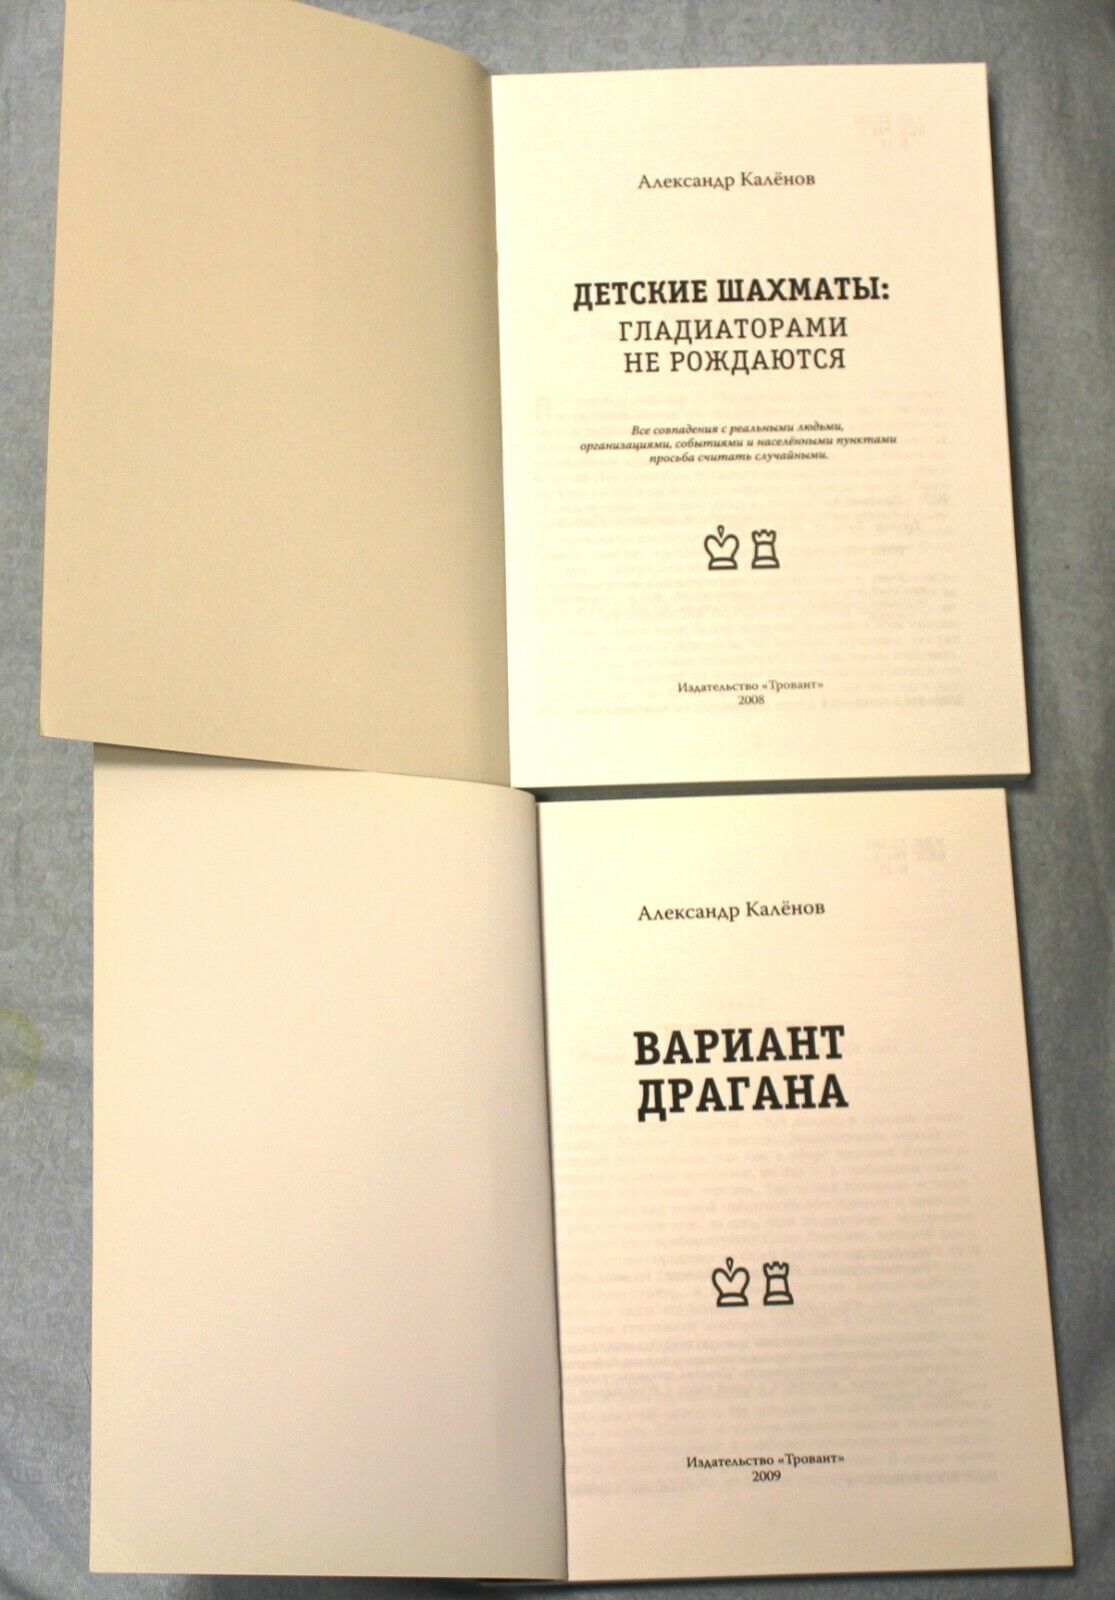 10694.2 Russian Chess Books. Dragan Variant. Children's chess.Troitsk, 2008-09